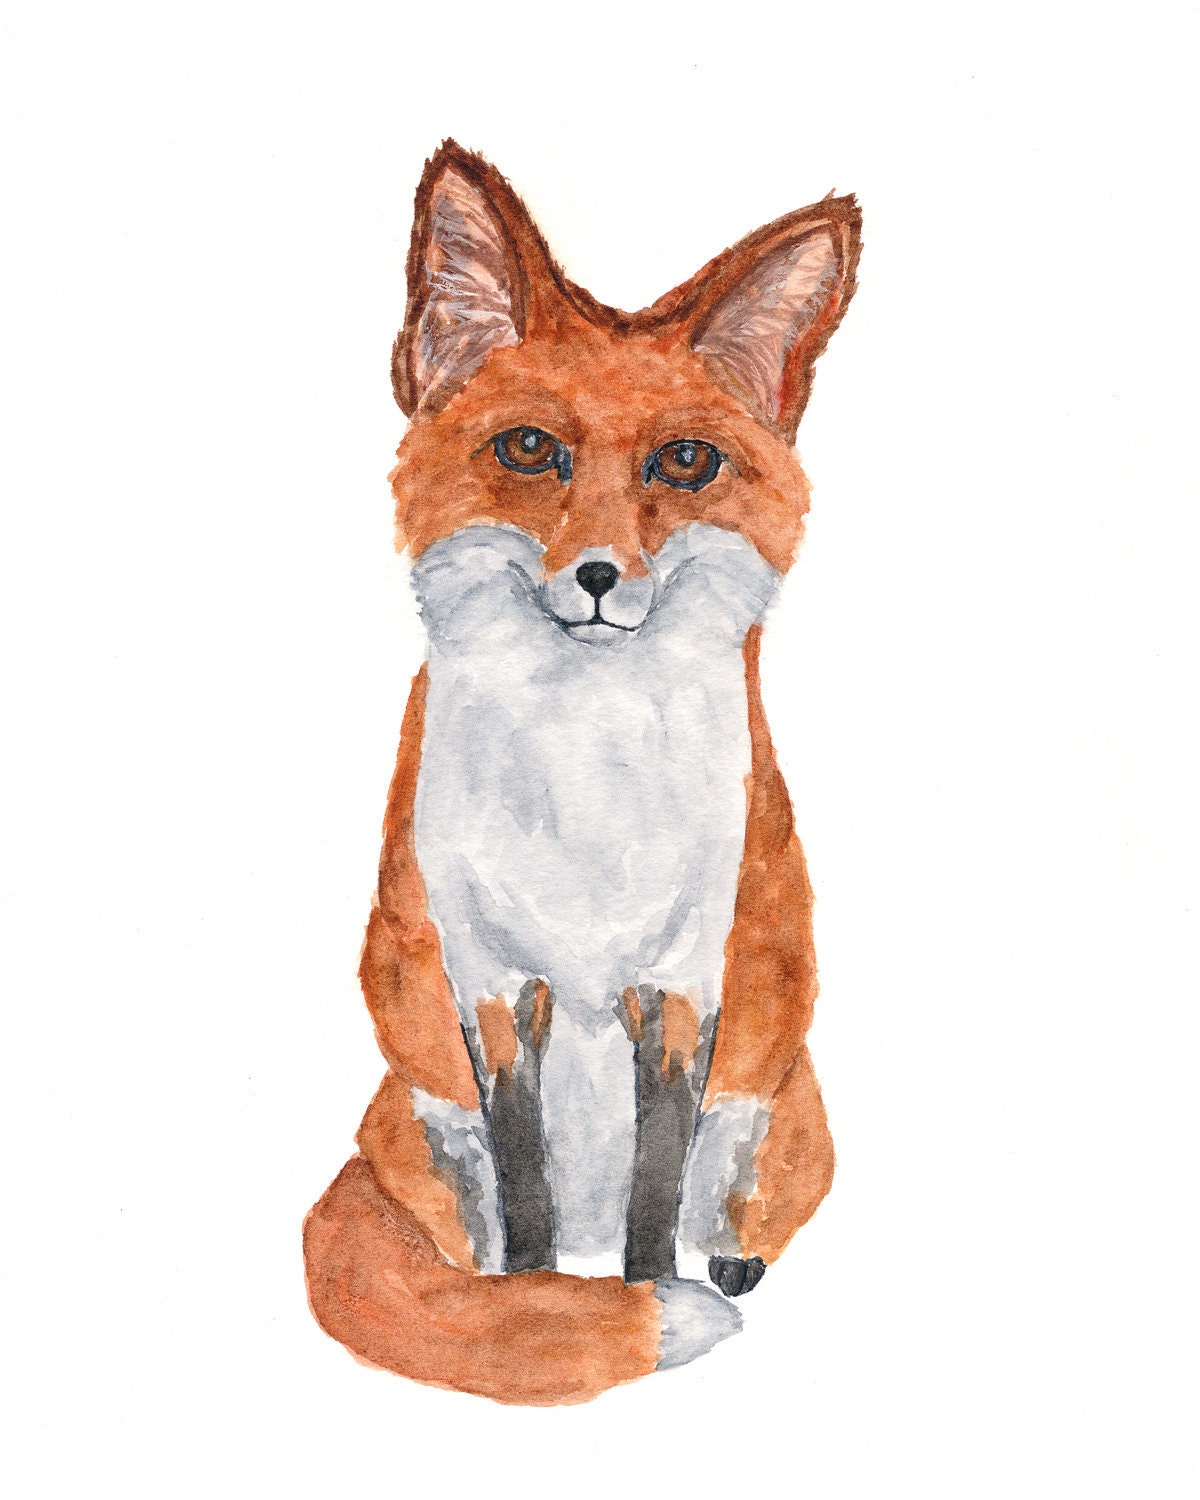 Red fox art, watercolor fox painting, woodland animal illustration - 8X10 print - ThimbleSparrow